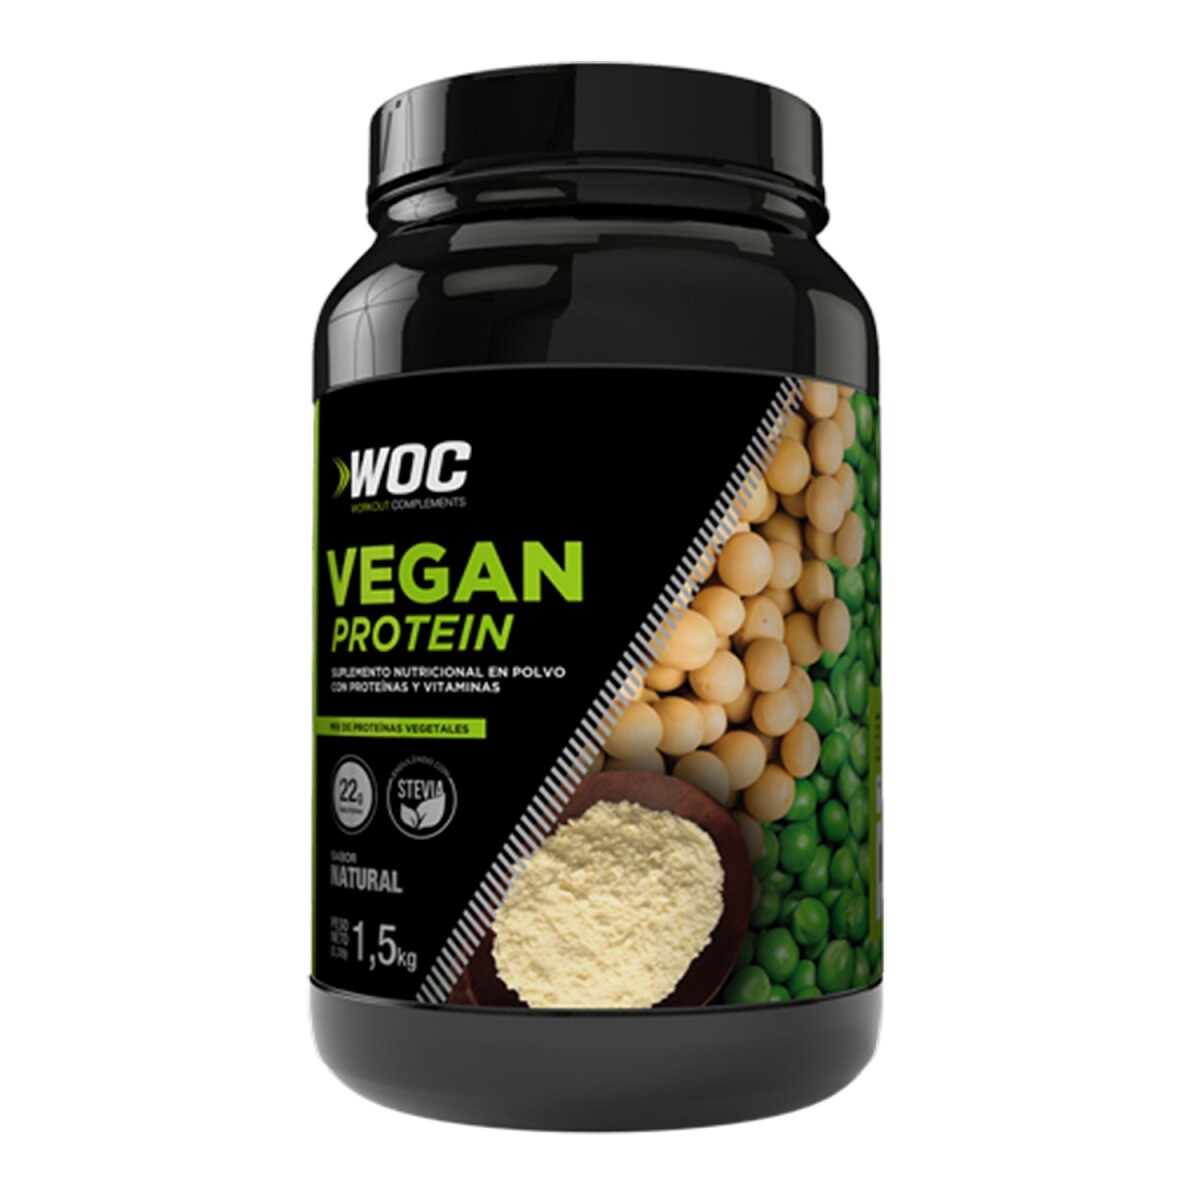 Vegan Protein Woc Natural 1,5 Kgs. 